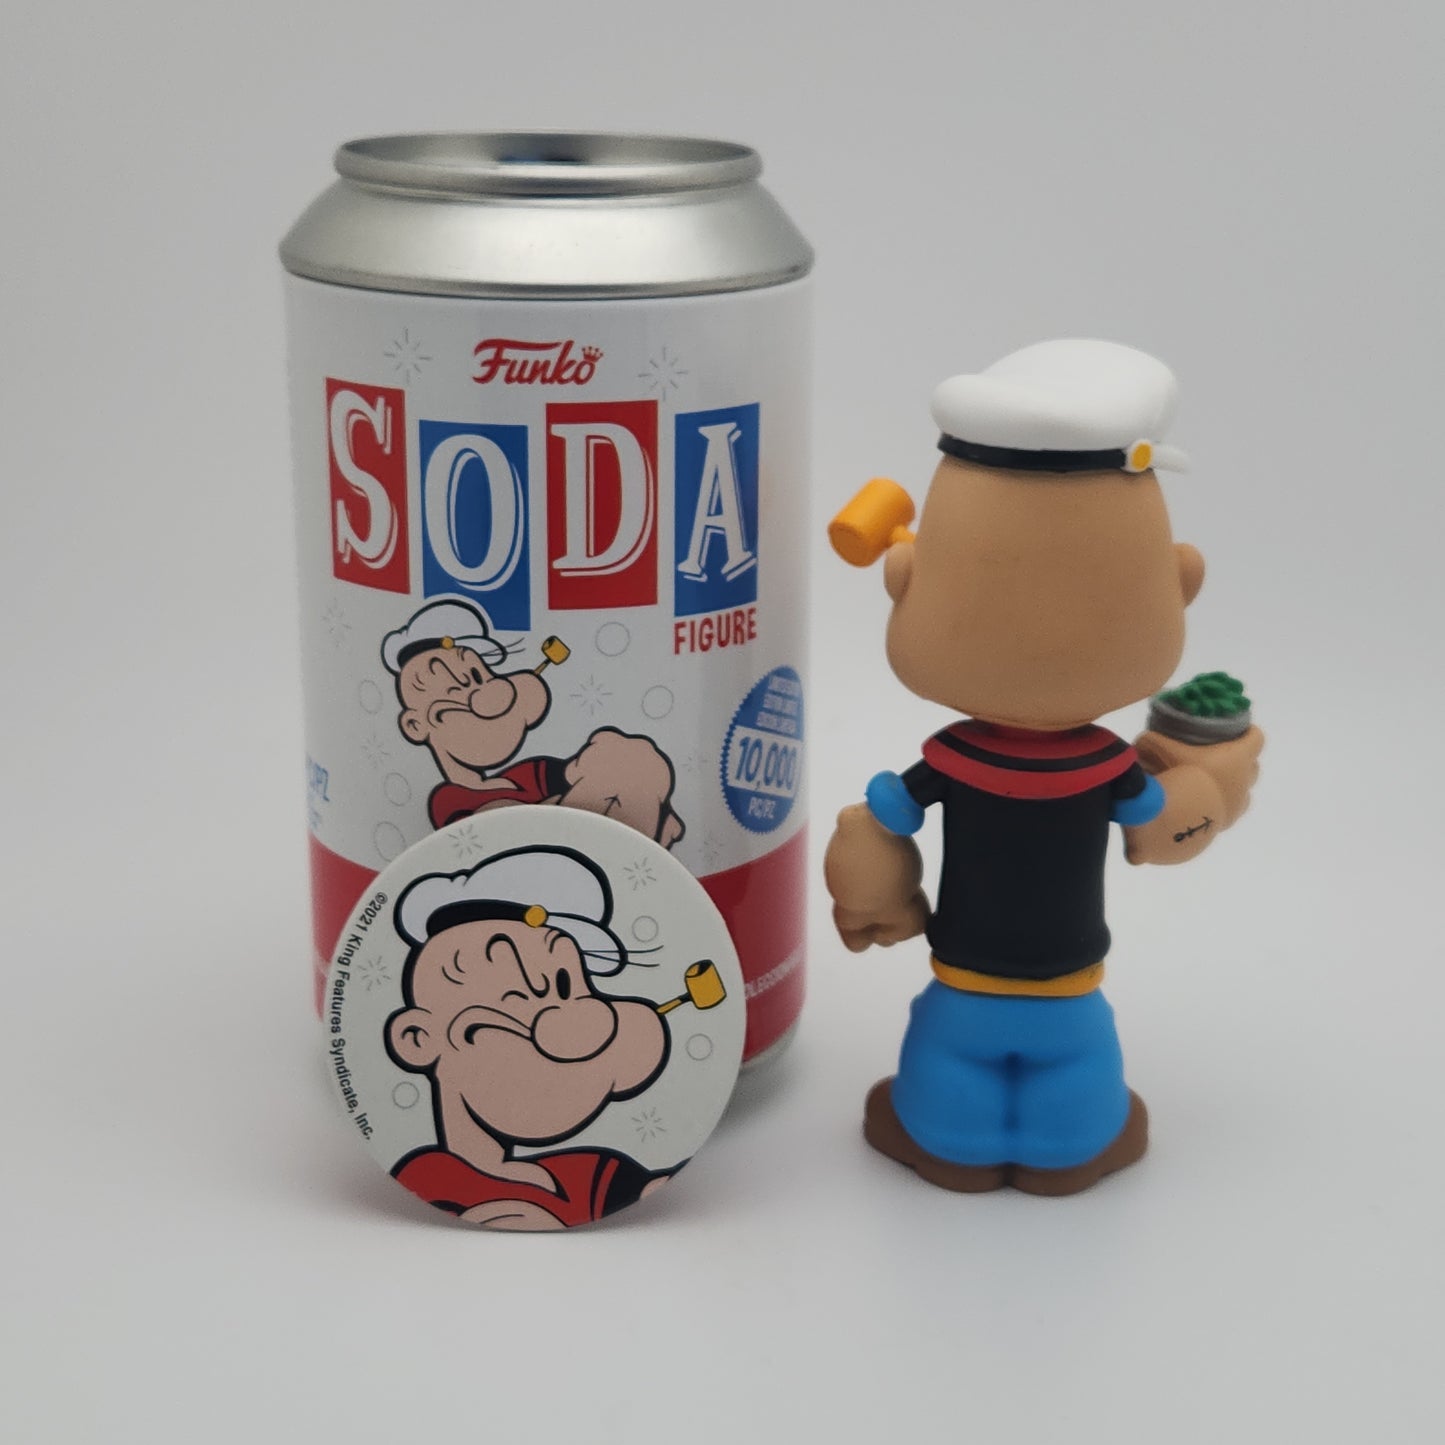 Funko Soda- Popeye